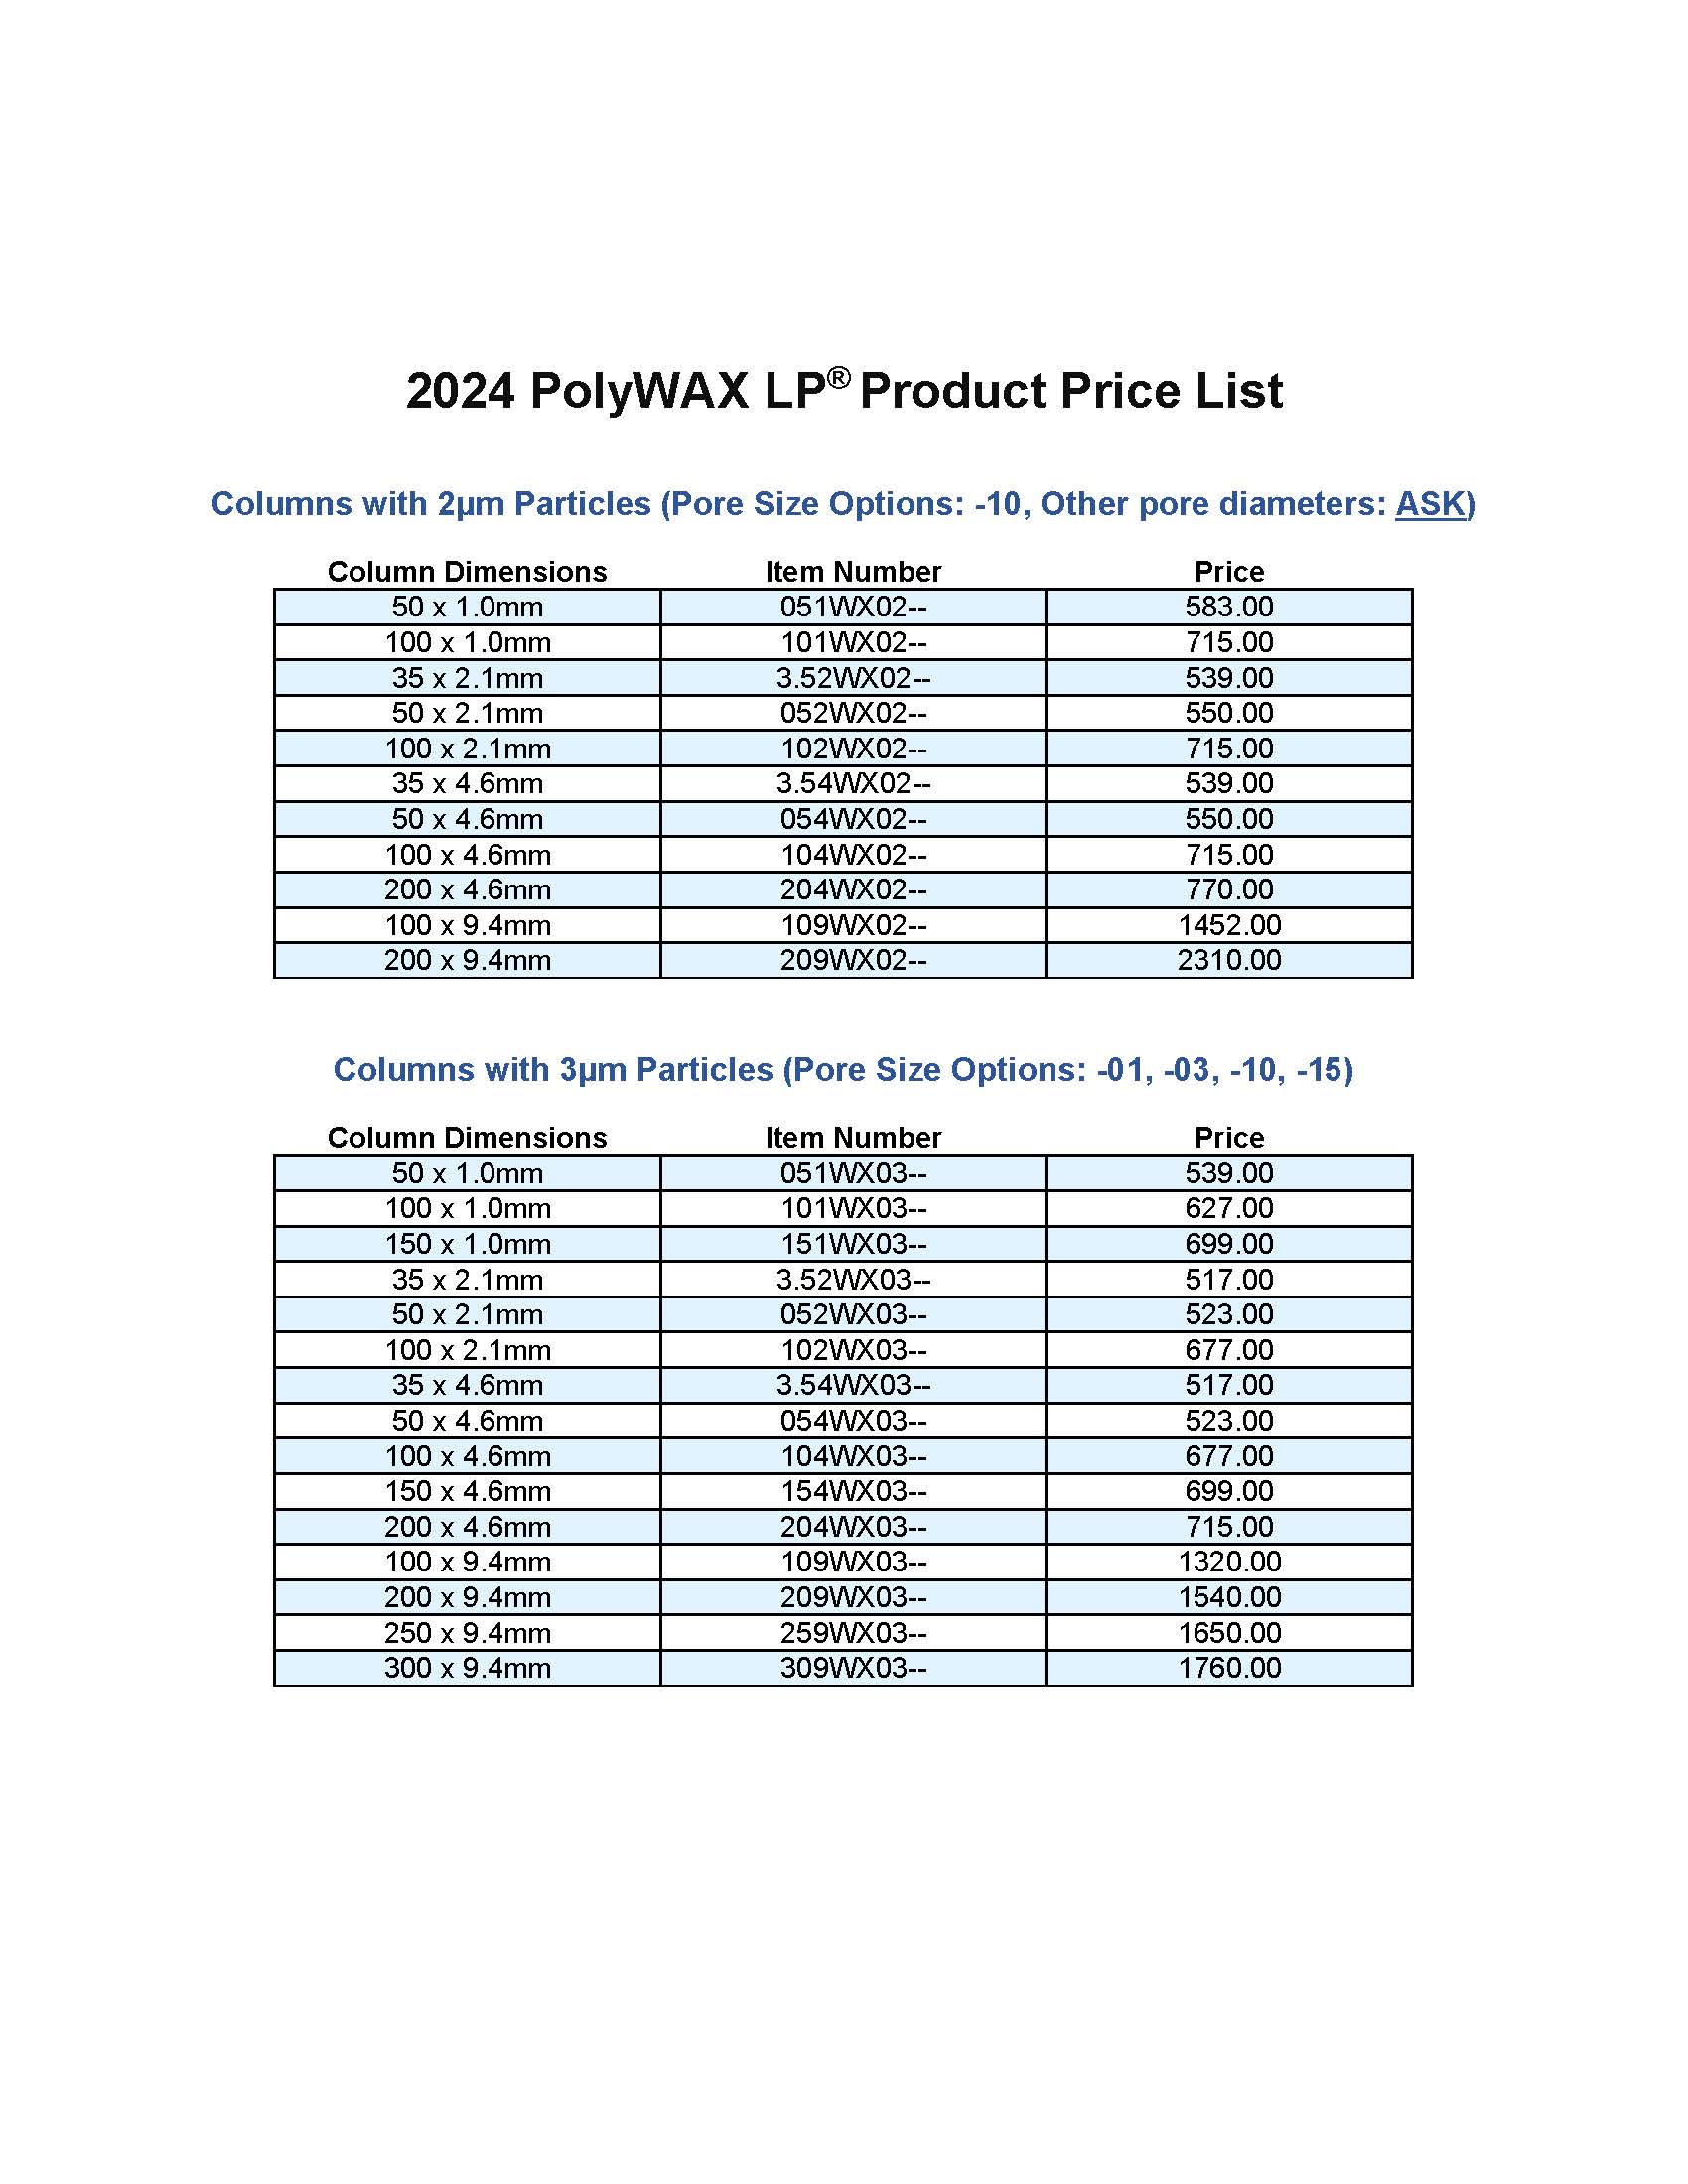 PolyWAX LP columns